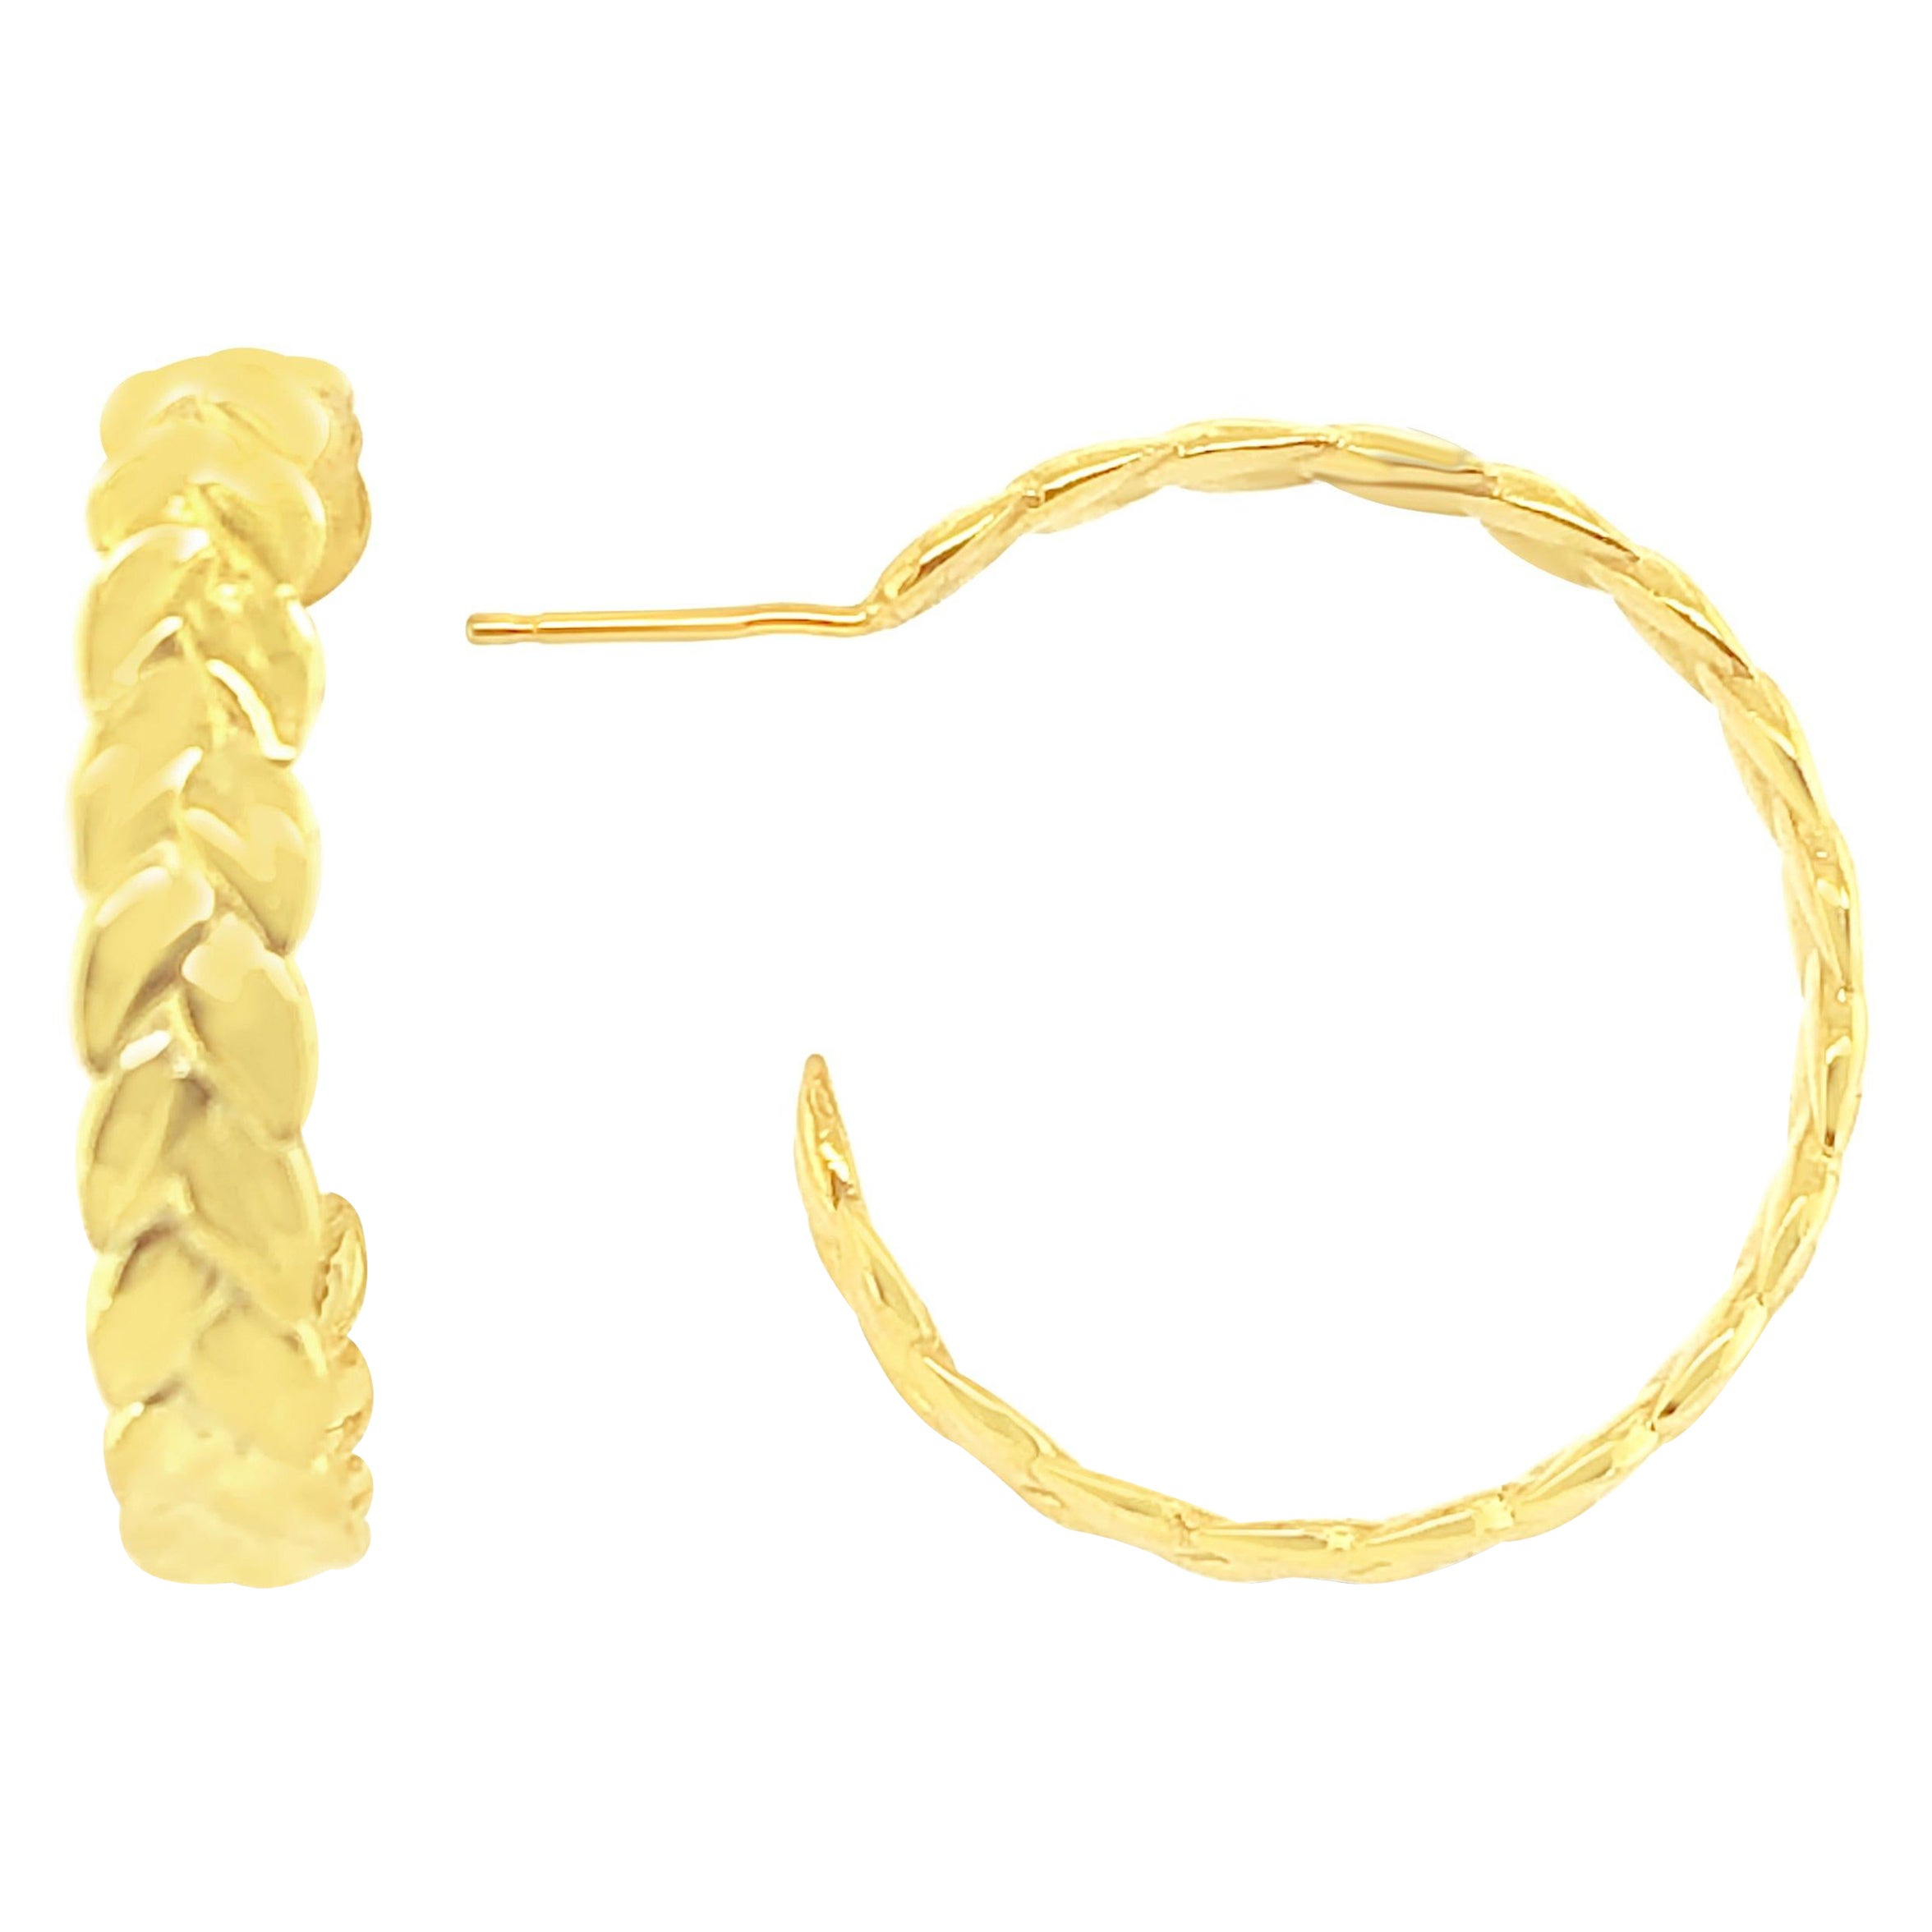 Wheat Sheaf Hoop Earrings in 18 Karat Gold Vermeil For Sale